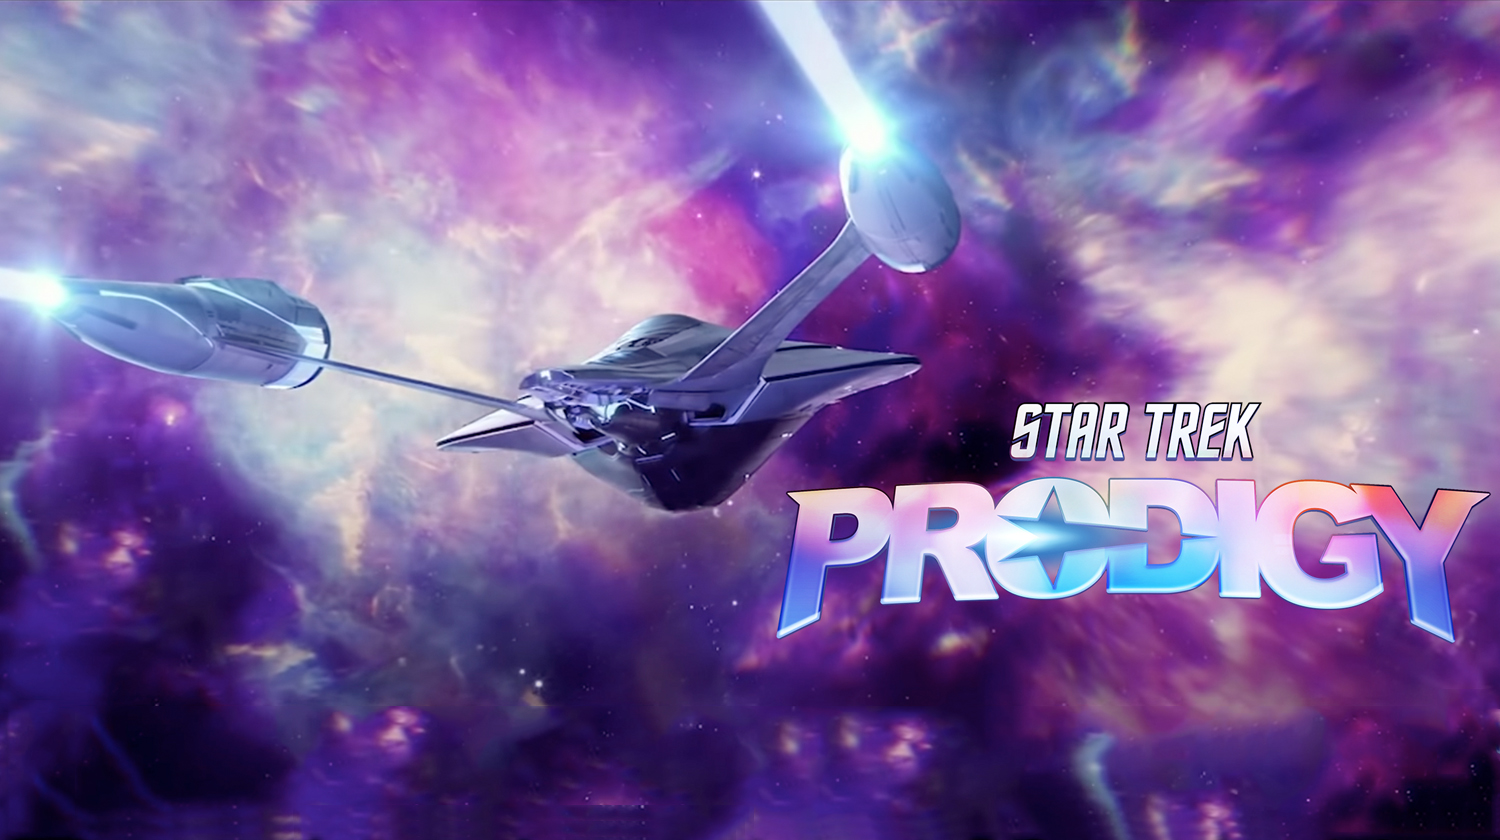 Watch a sneak peek of the 'Star Trek: Prodigy' opening sequence